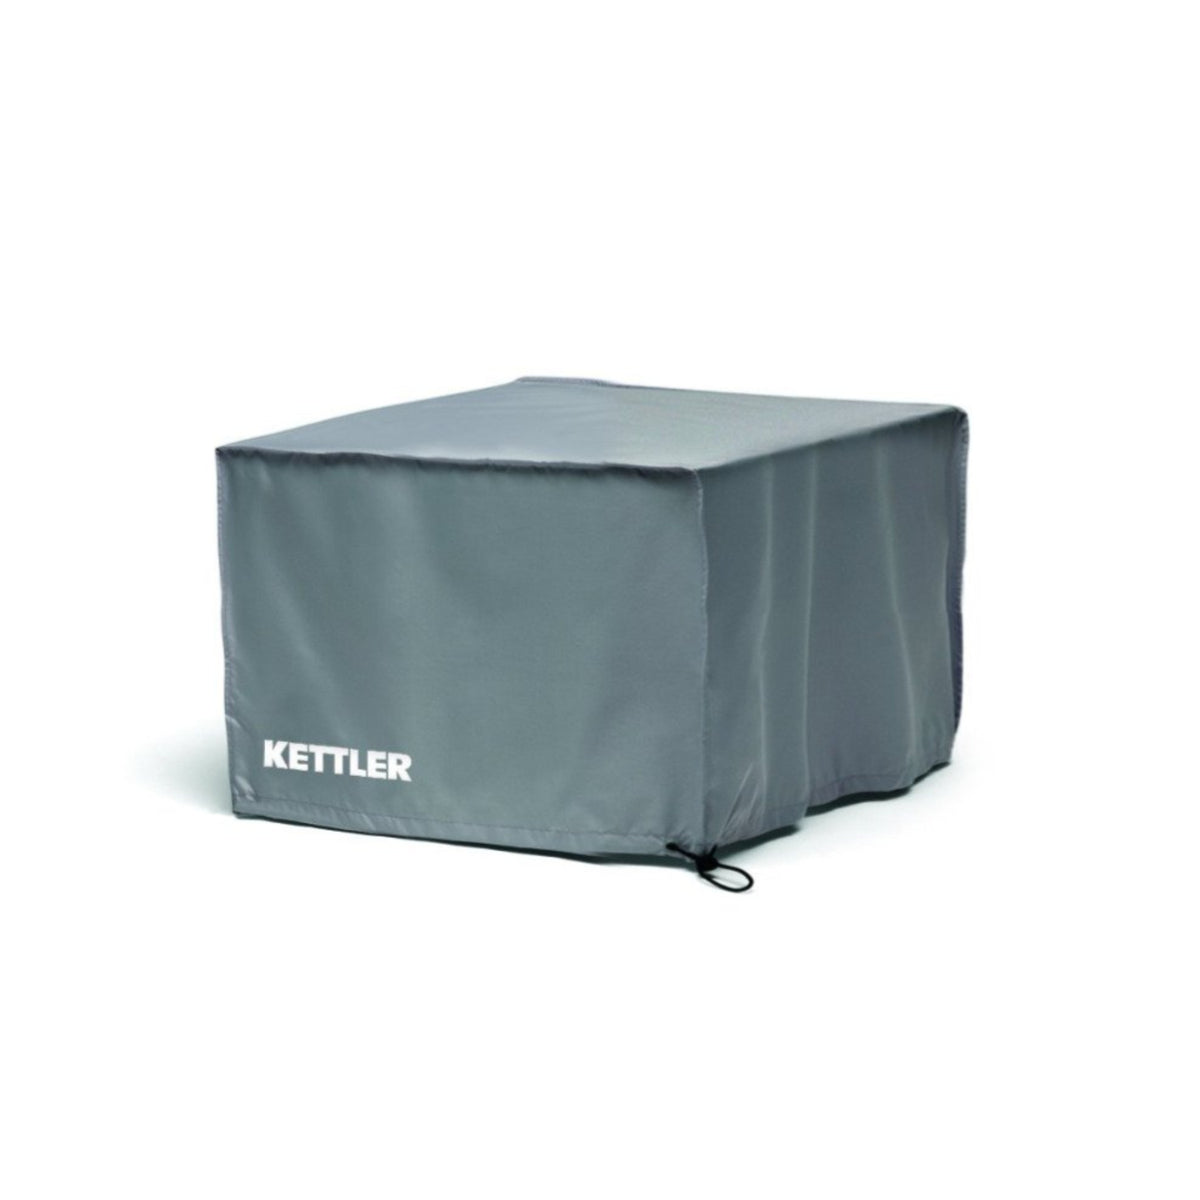 Kettler Protective Garden Furniture Cover for Elba Single Footstool